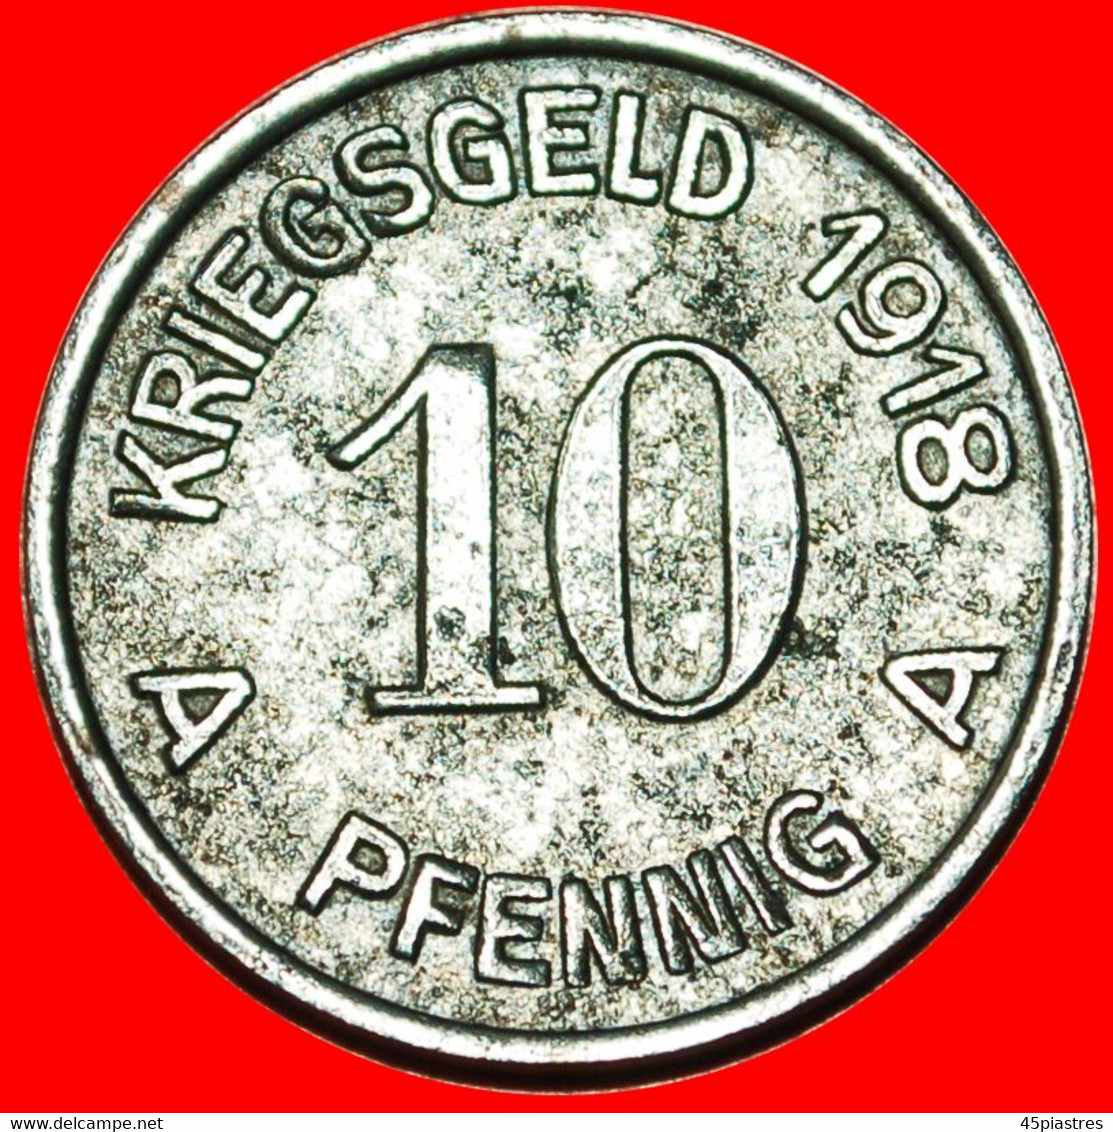 * HAND GRENADE WESTPHALIA: GERMANY LUEDENSCHEID ★ 10 PFENNIGS 1918! TO BE PUBLISHED! LOW START! ★ NO RESERVE! - Monétaires/De Nécessité